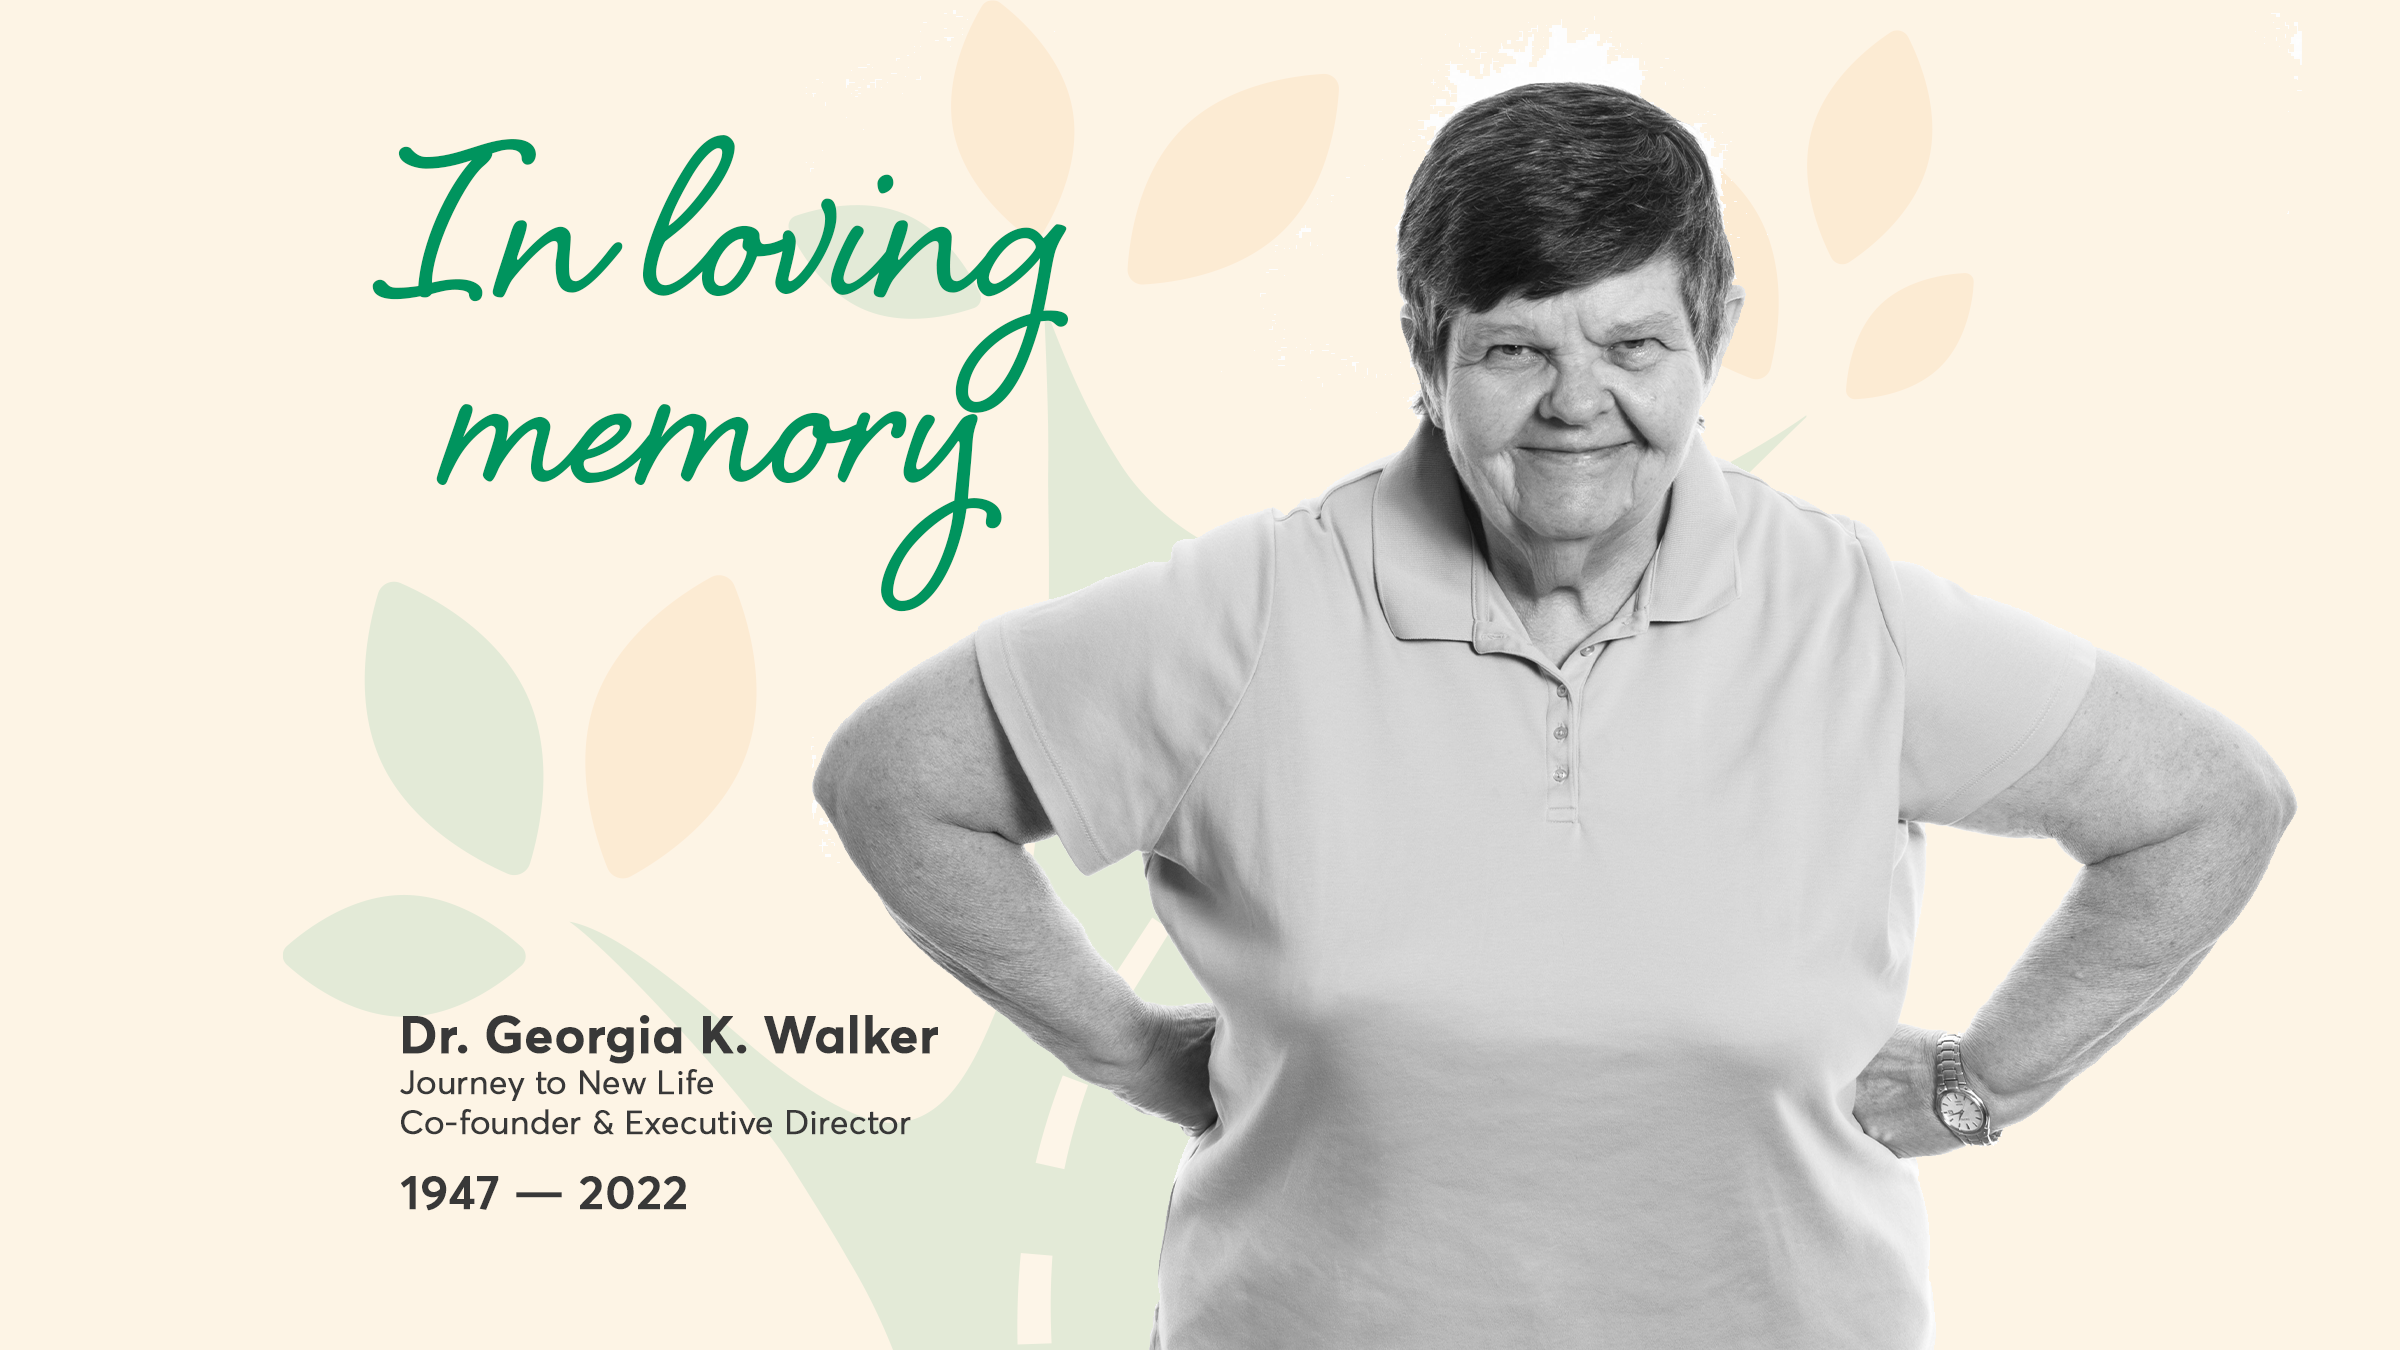 In loving memory of Dr. Georgia K. Walker